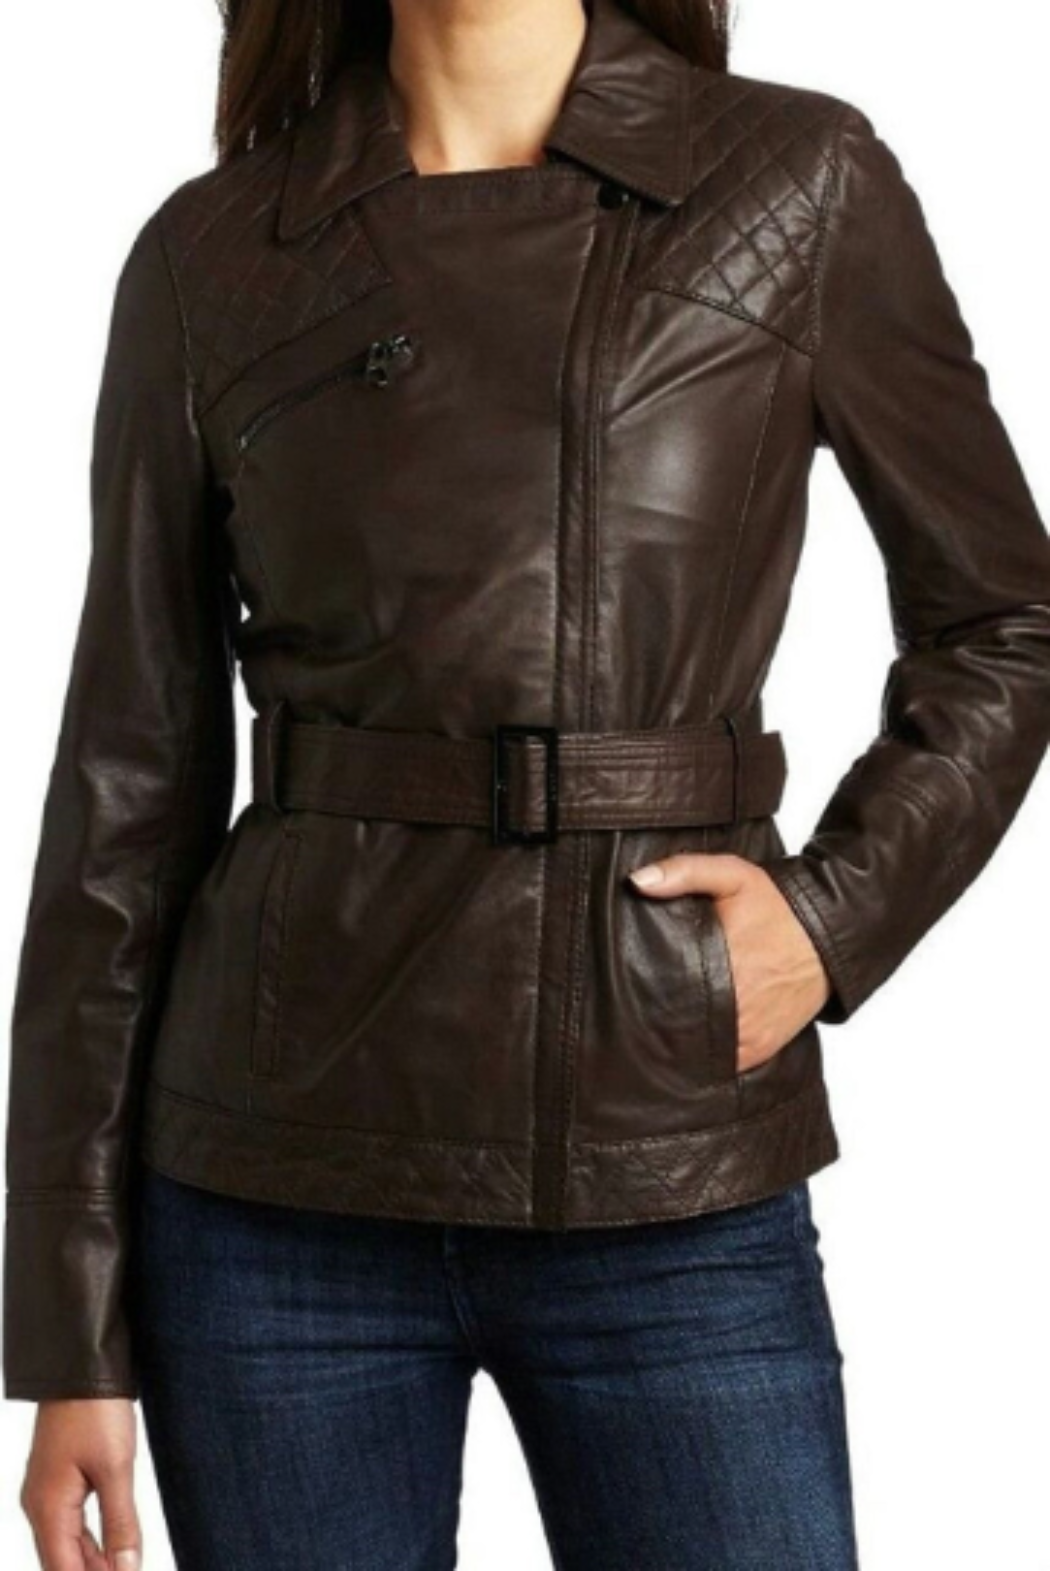 NOORA New Women Lambskin Shiny Brown Leather Jacket, Retro Style Biker Belted Jacket, Quilted Designer Slim Fit Jacket YK075